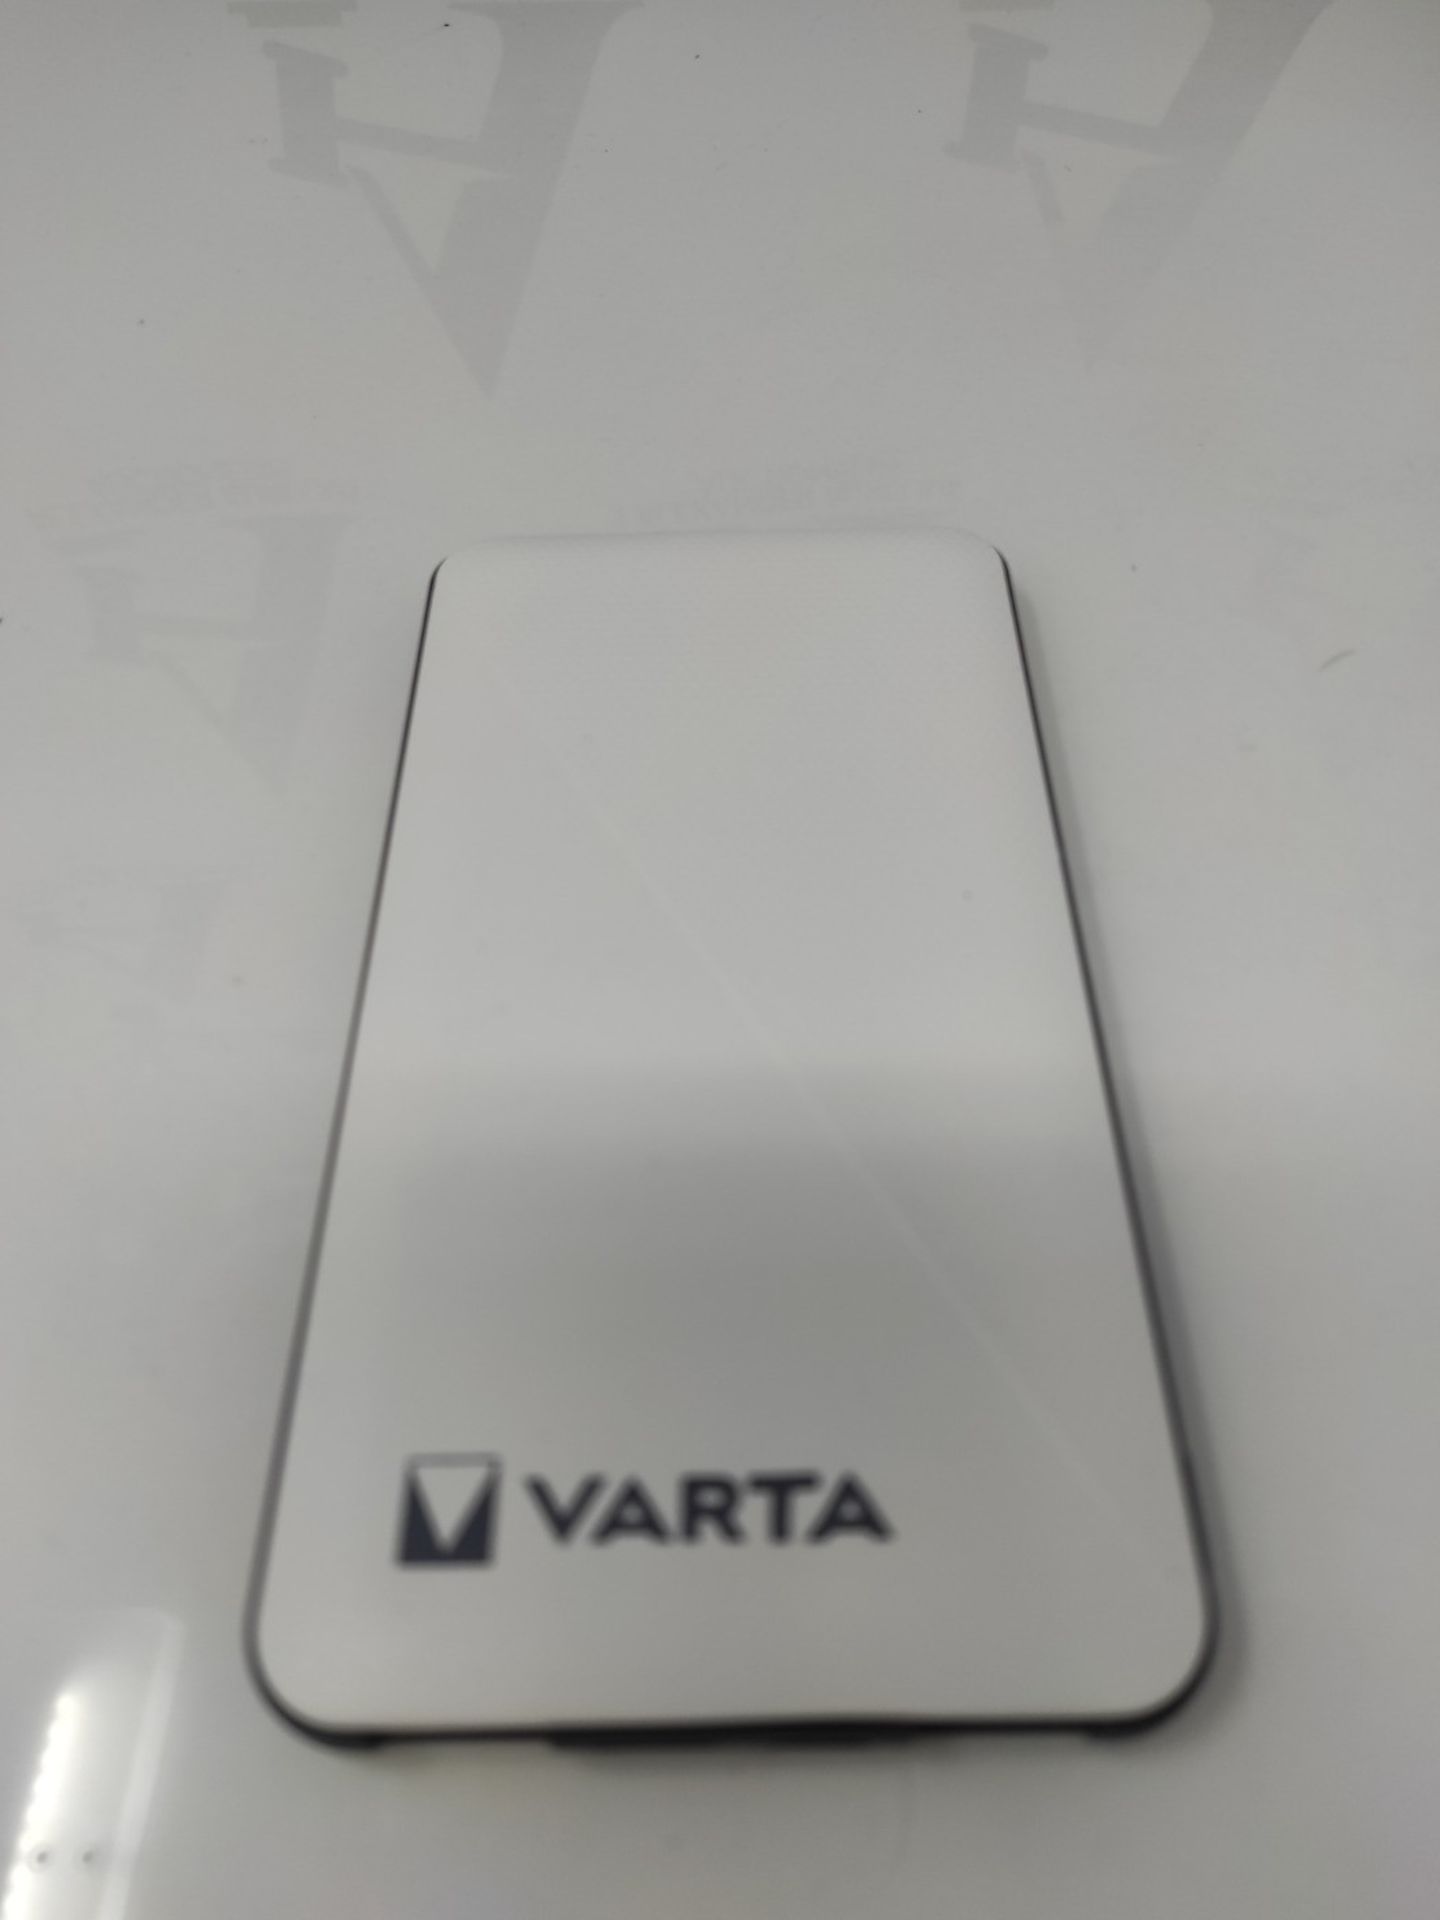 VARTA Power Bank 5000mAh, Powerbank Energy with 4 ports (1x Micro USB, 2x USB A, 1x US - Image 2 of 6